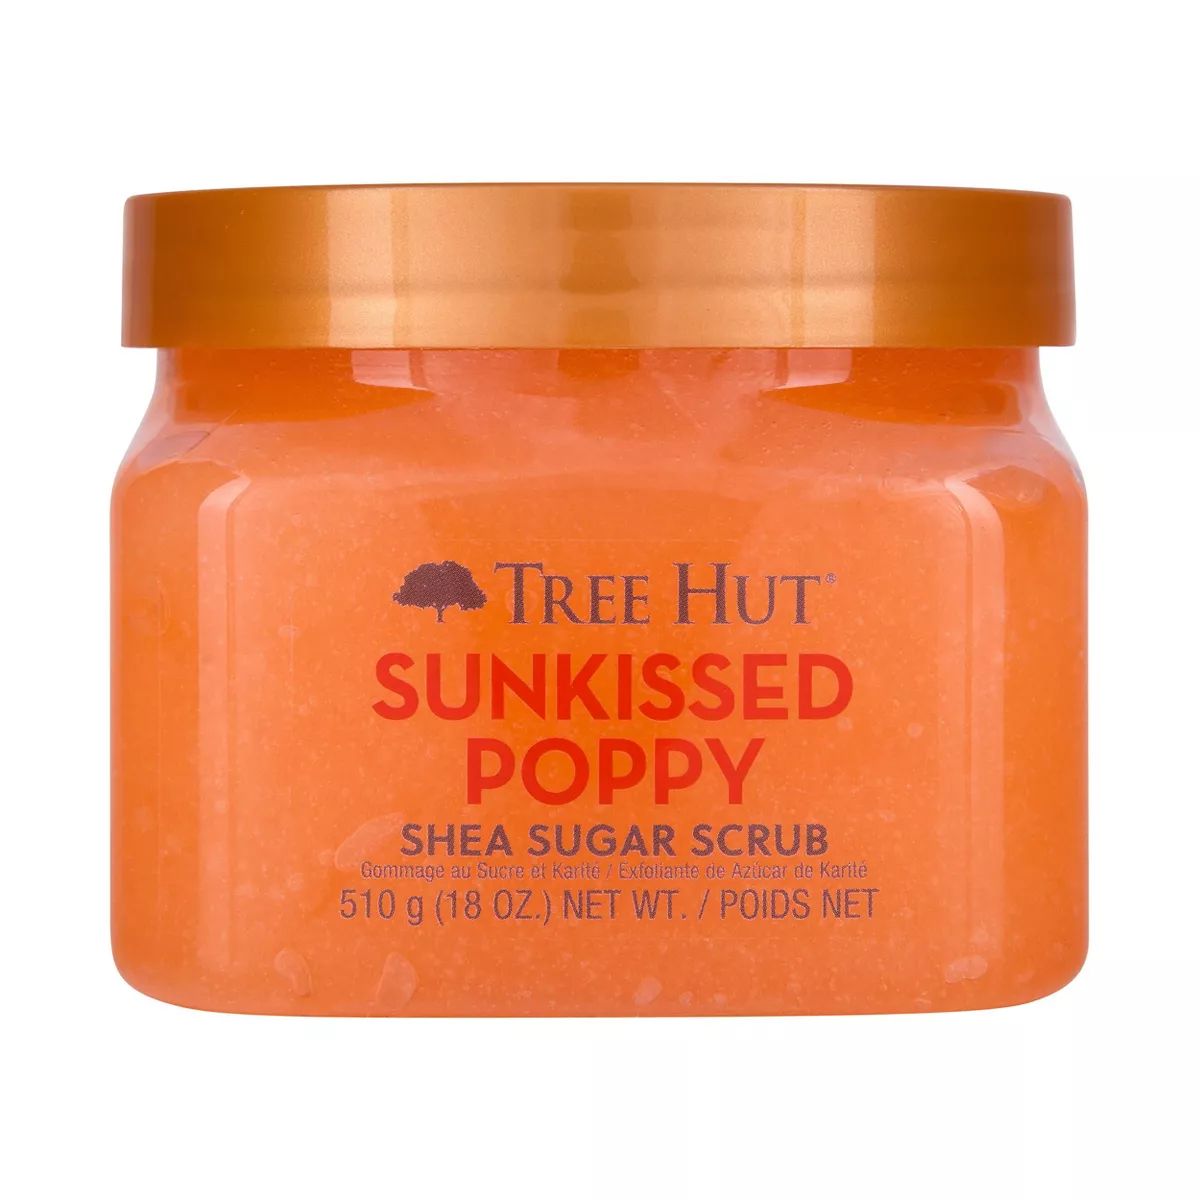 Tree Hut Sunkissed Poppy Shea Sugar Body Scrub - 18oz | Target